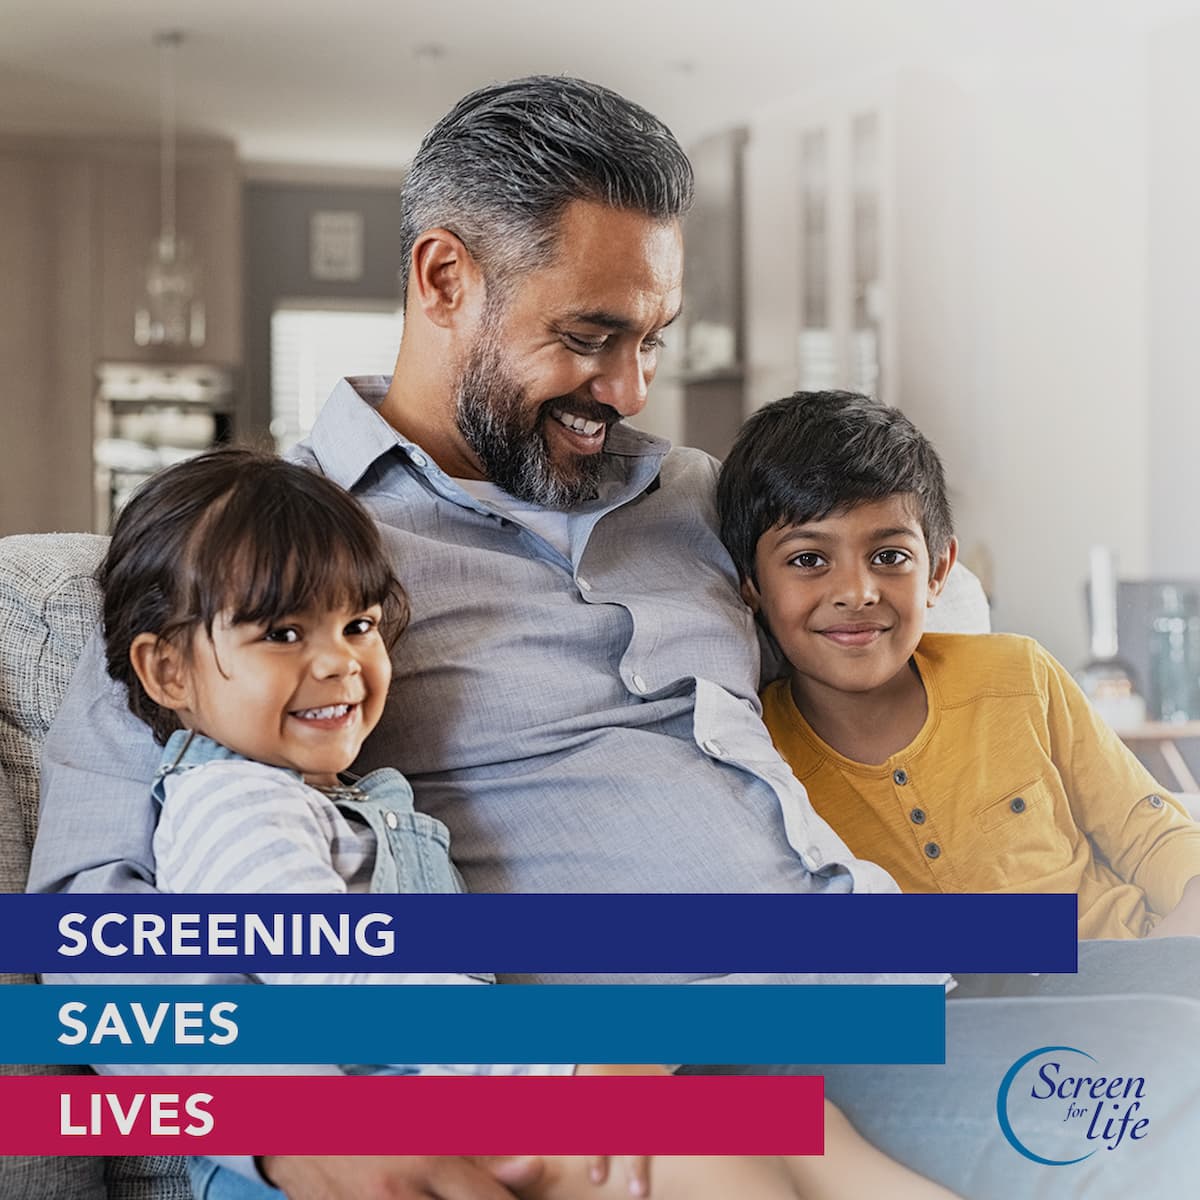 Screening saves lives